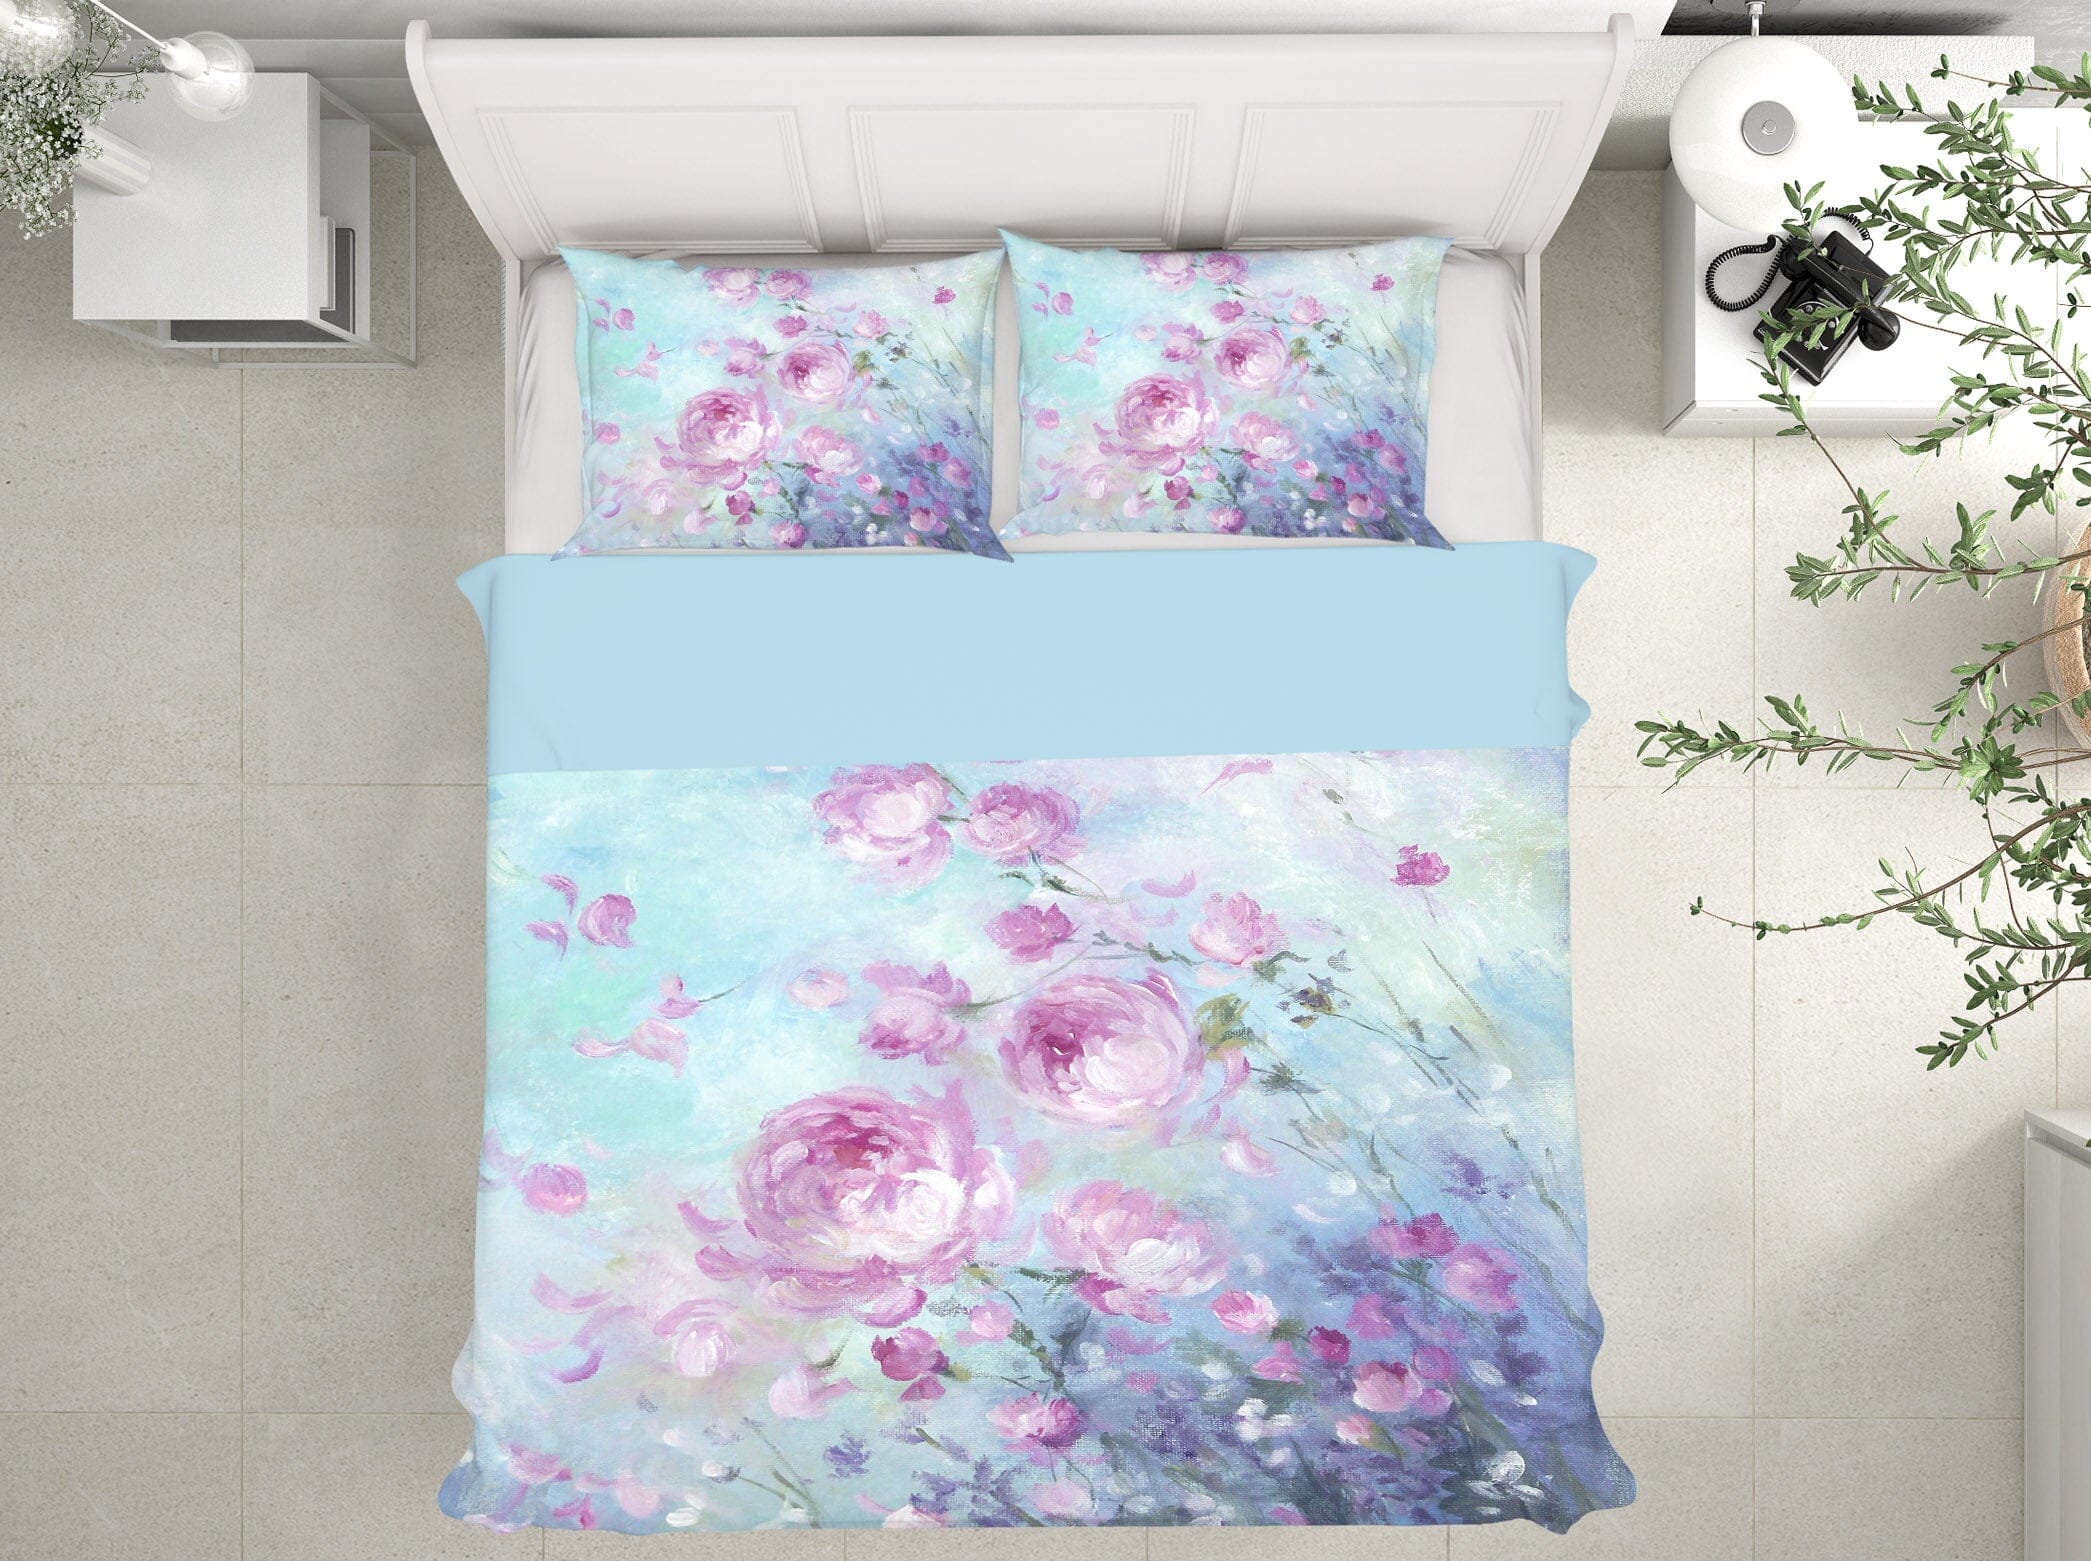 3D Purple Flowers 025 Debi Coules Bedding Bed Pillowcases Quilt Quiet Covers AJ Creativity Home 